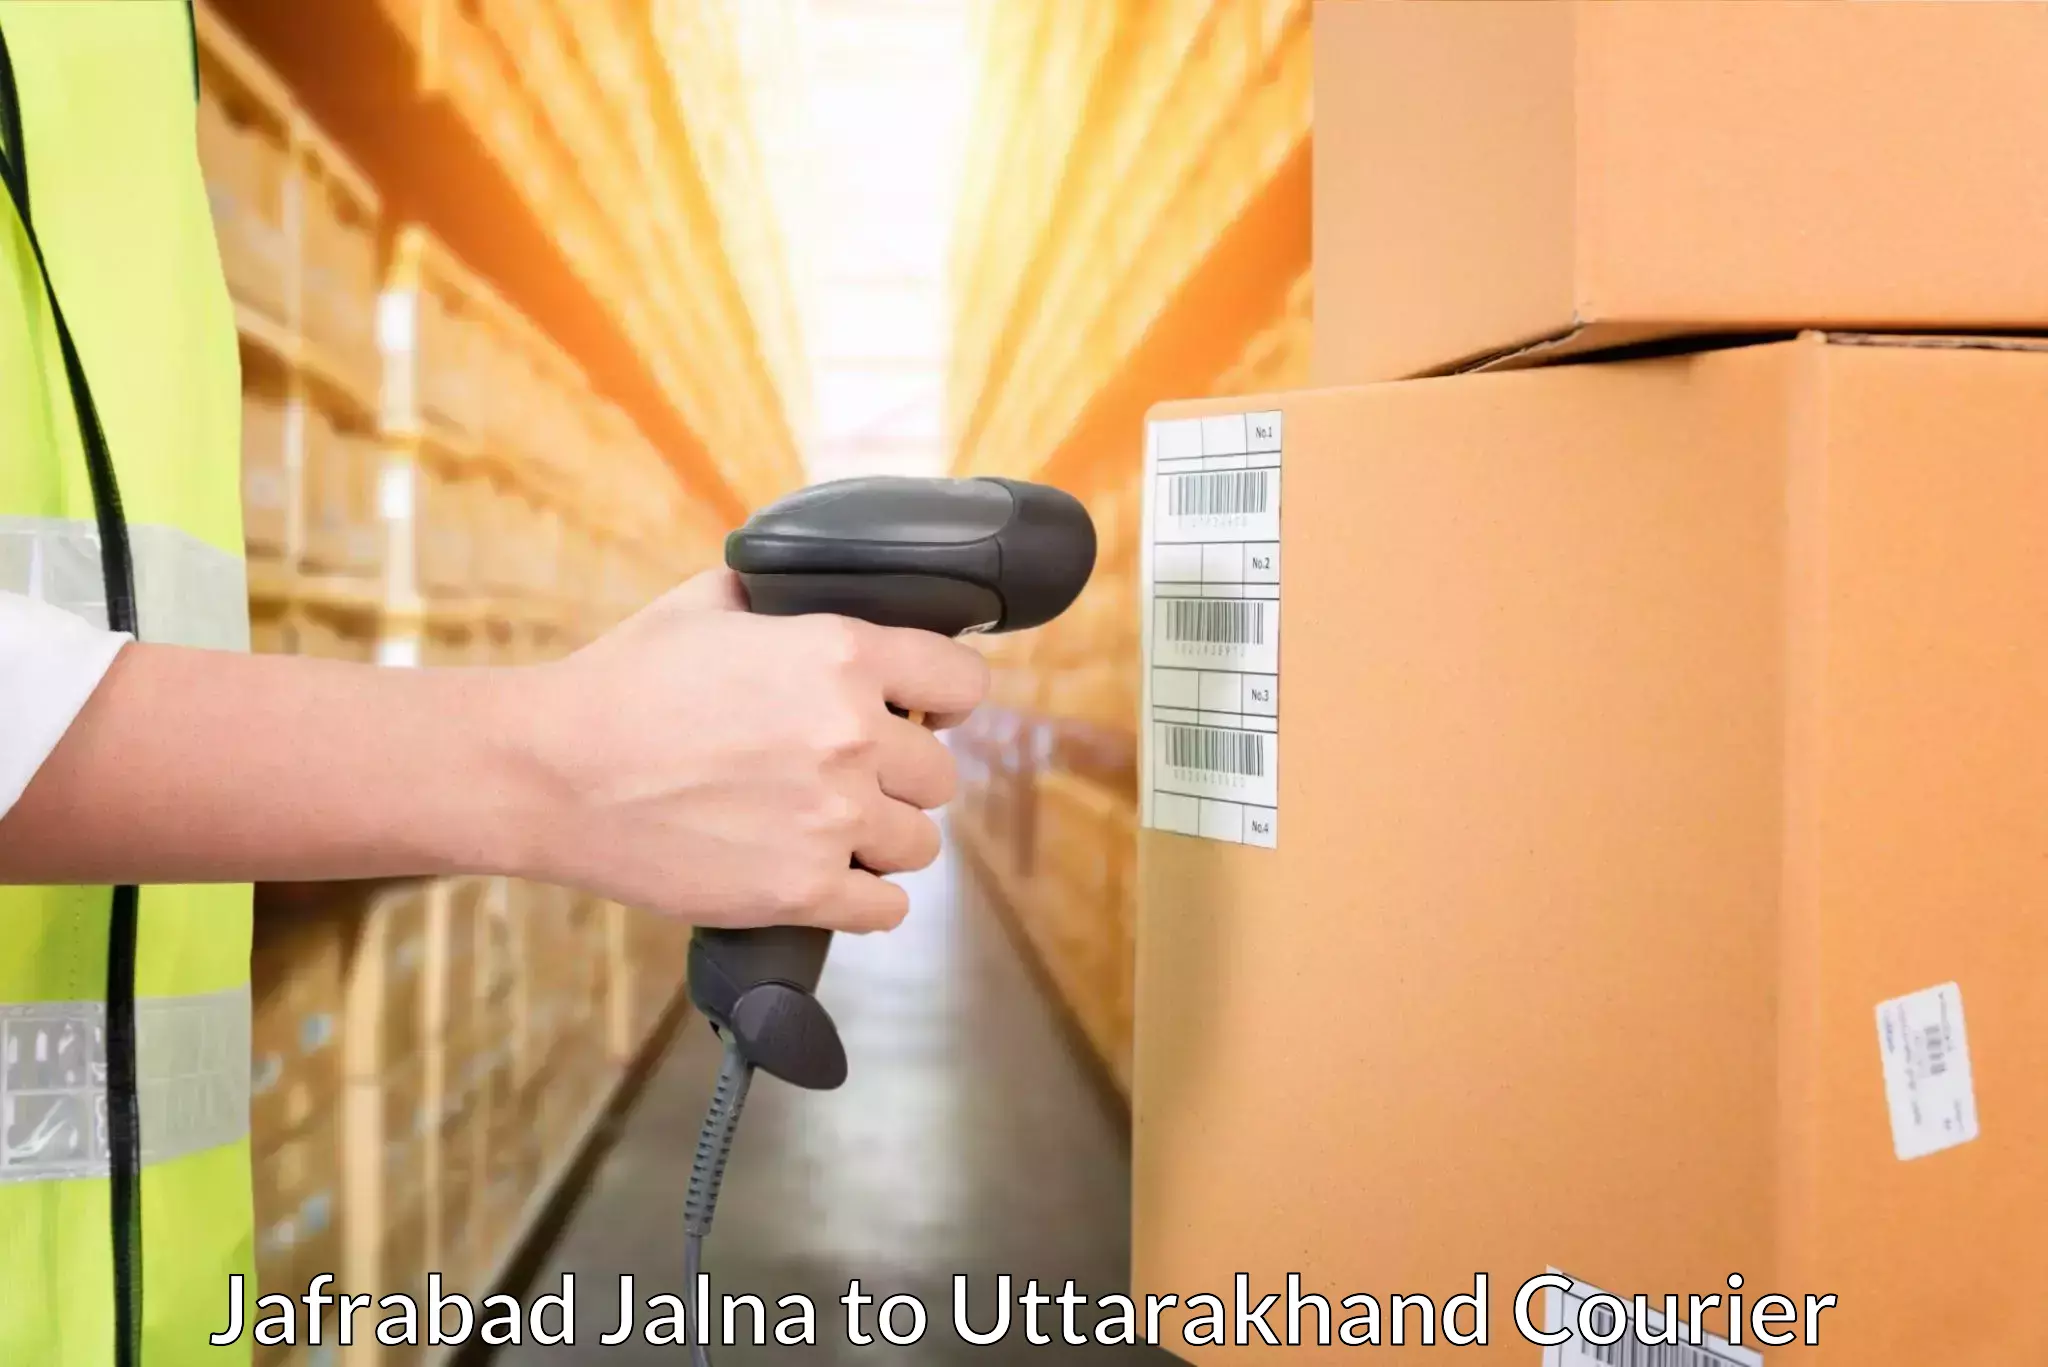 Seamless shipping experience Jafrabad Jalna to Bageshwar